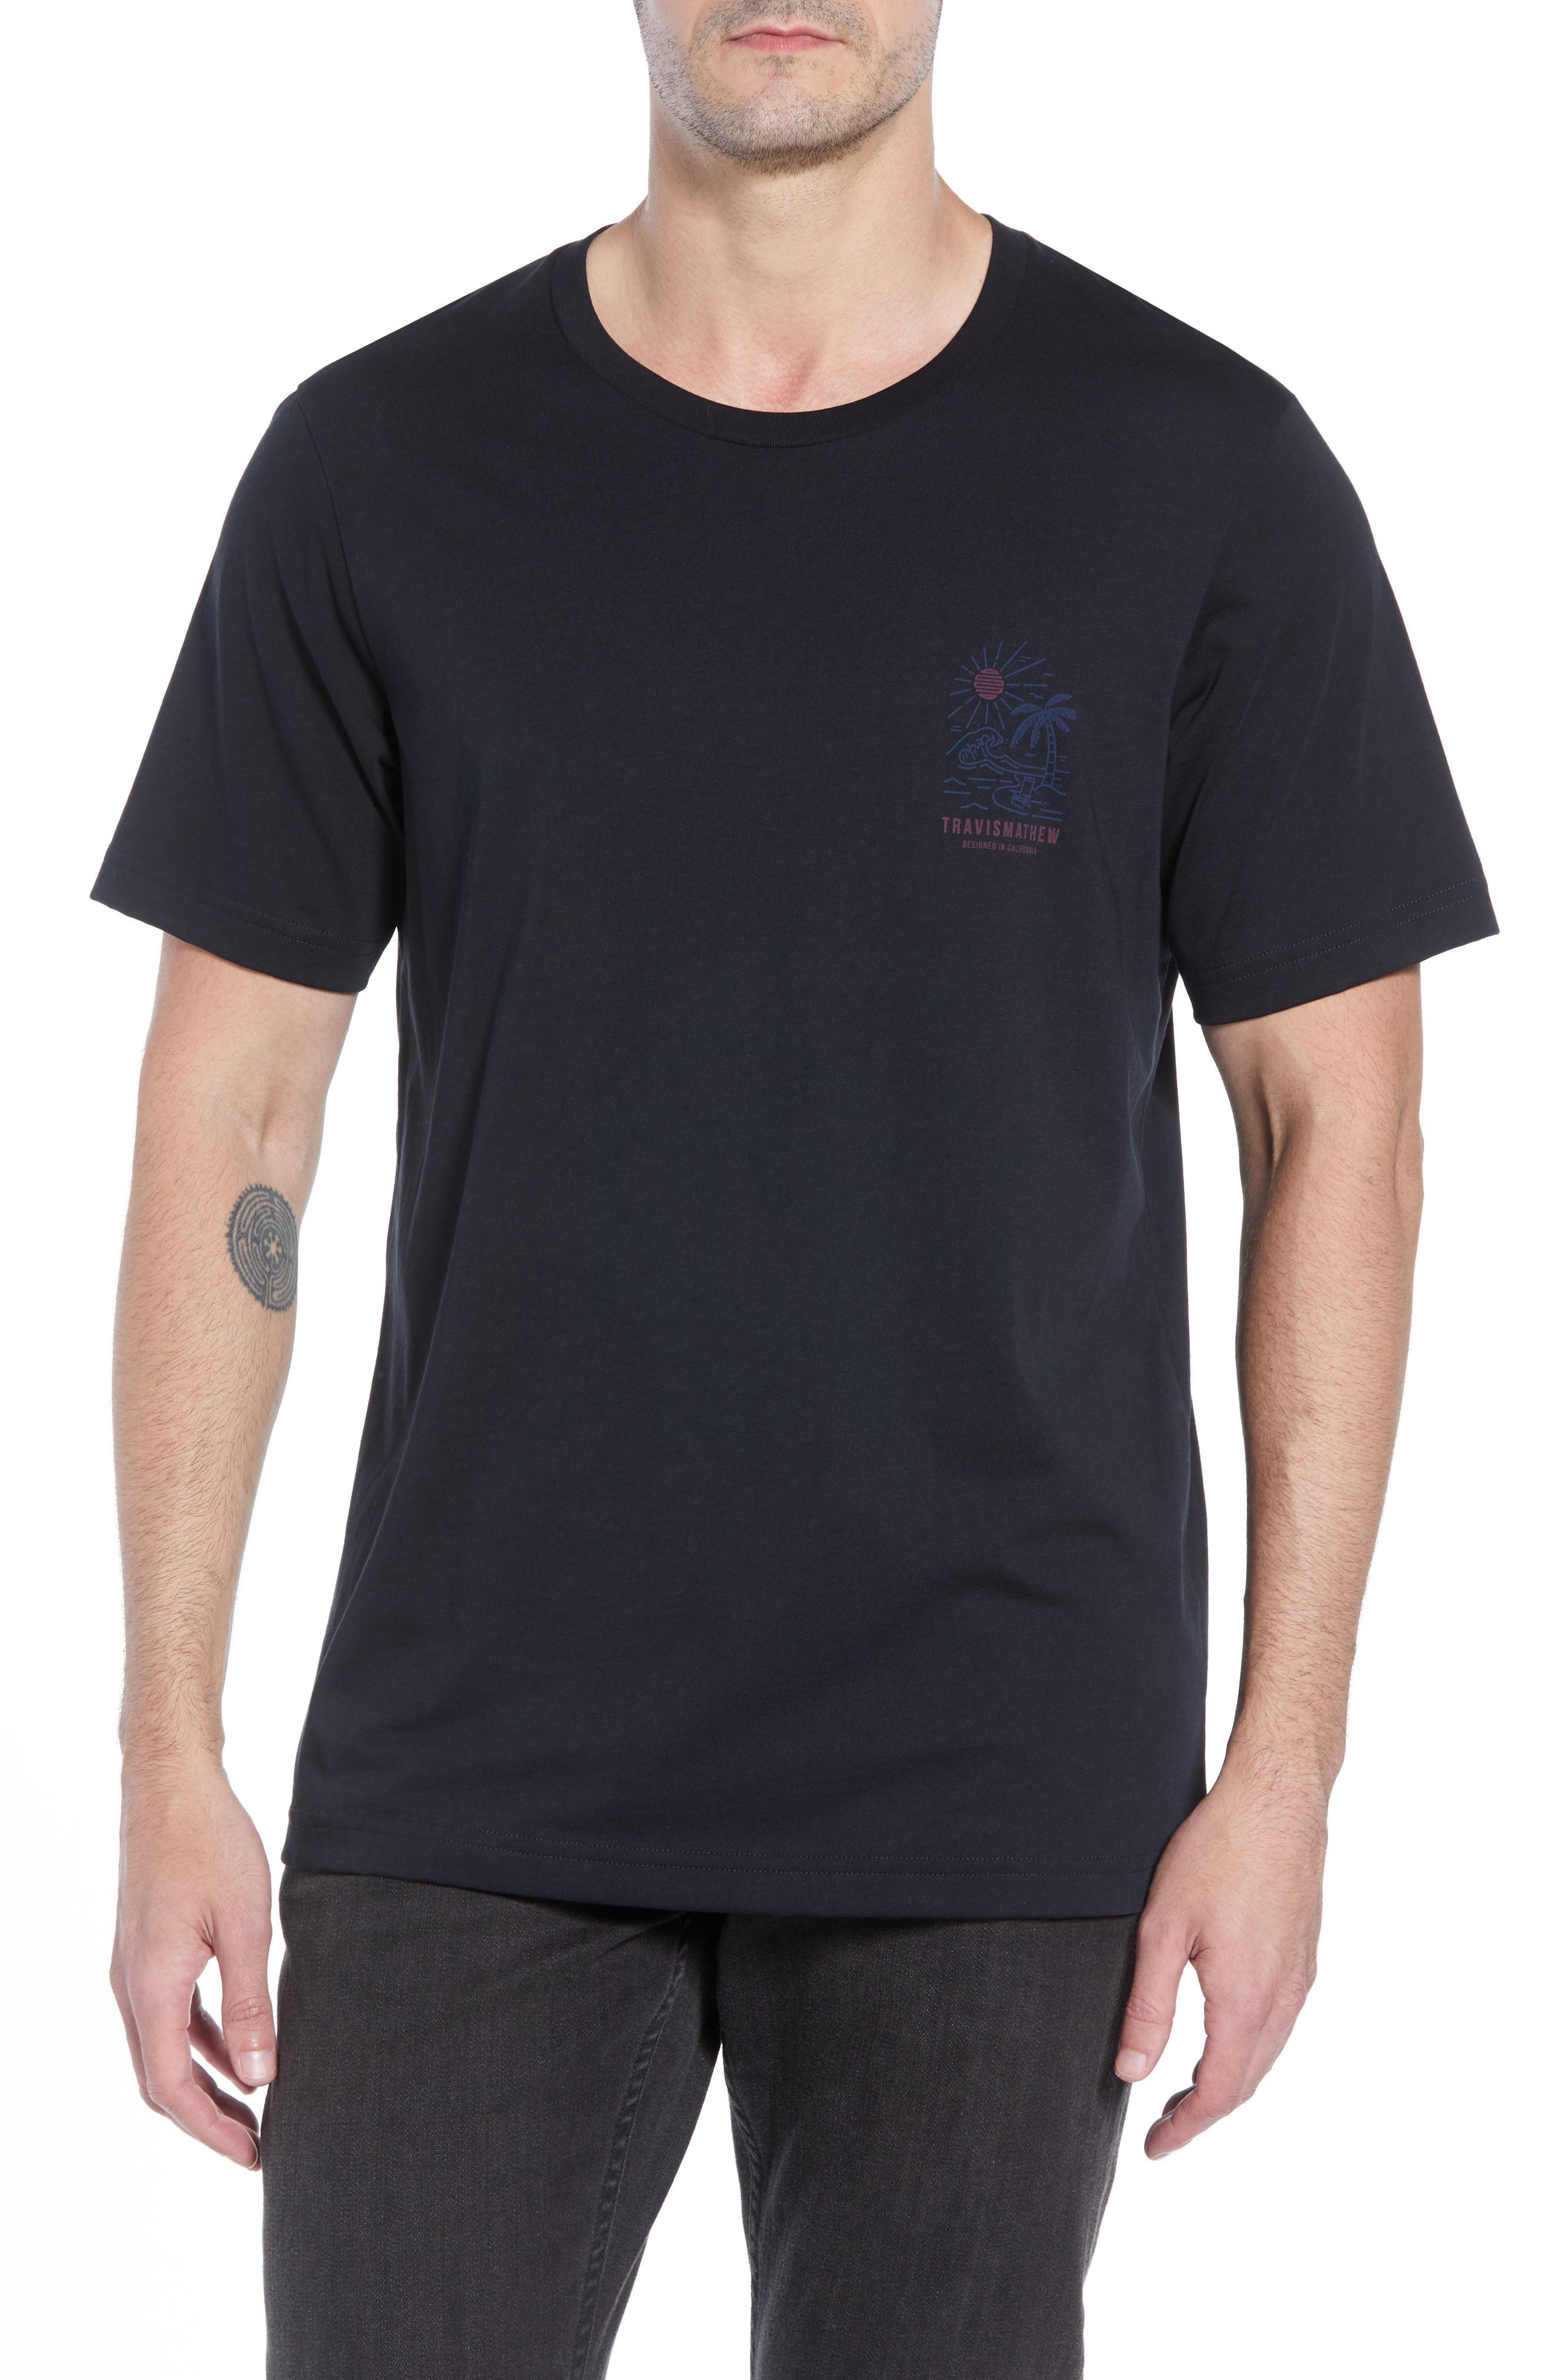 Travis Mathew Men's T-Shirts, stylish comfort clothing